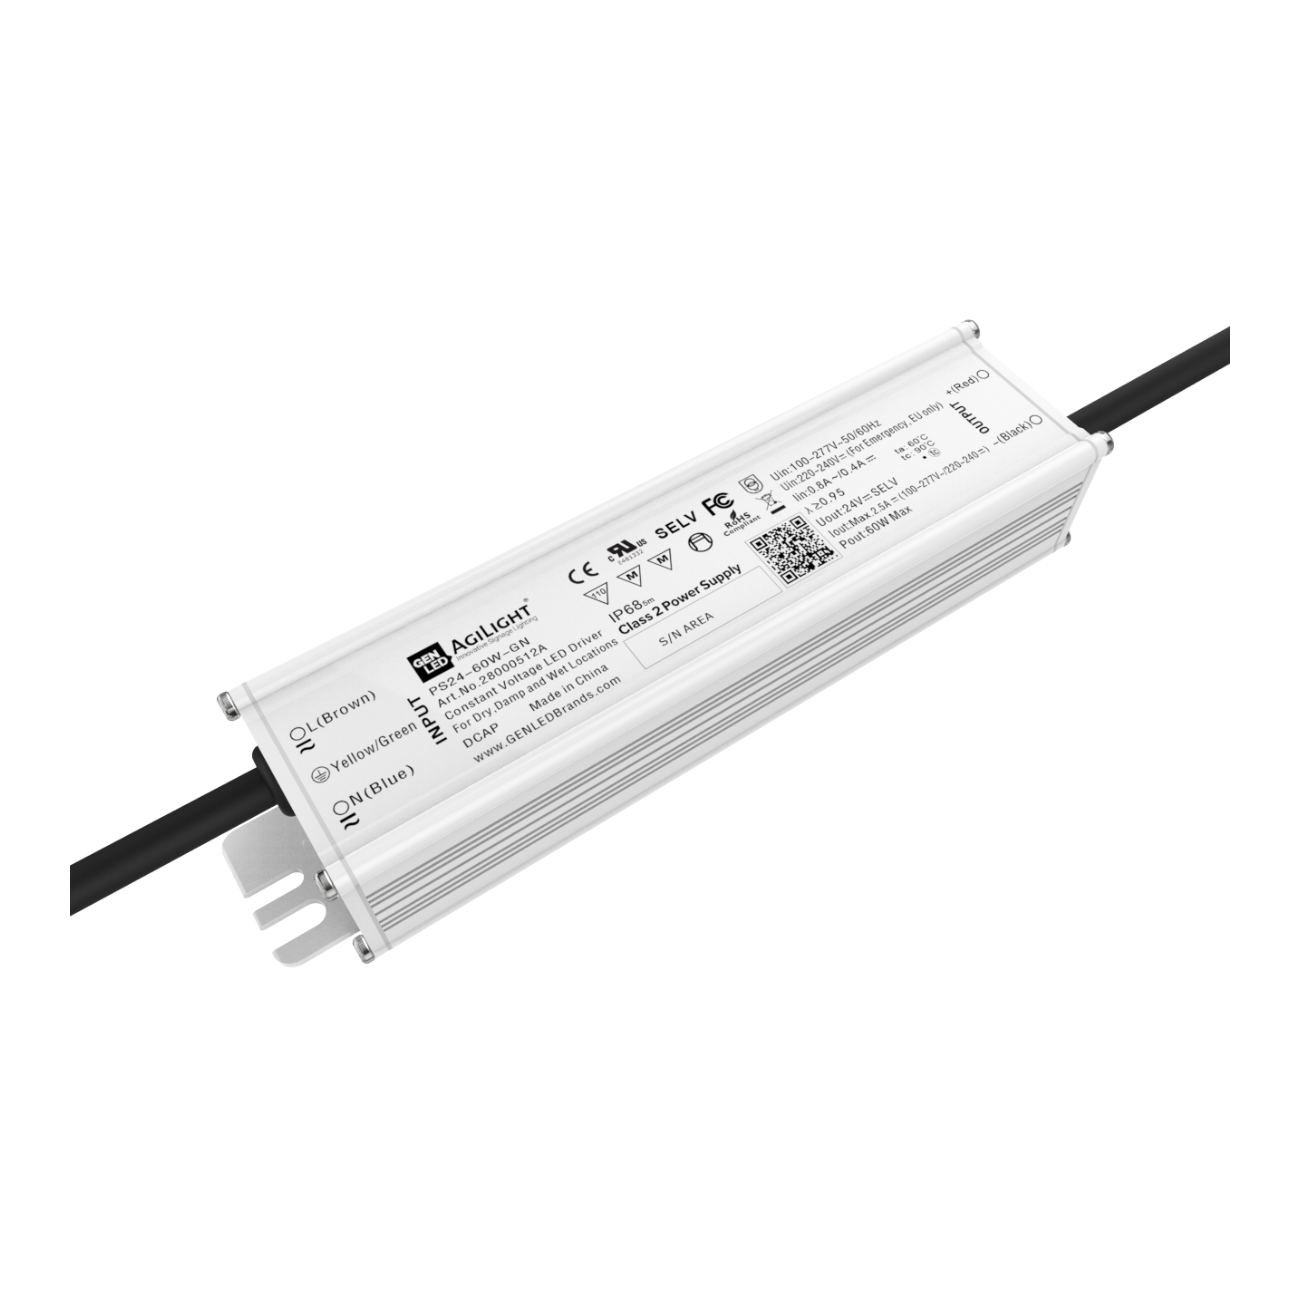 AgiLight PS24-60W-GN (60W/24V) LED-Netzteil